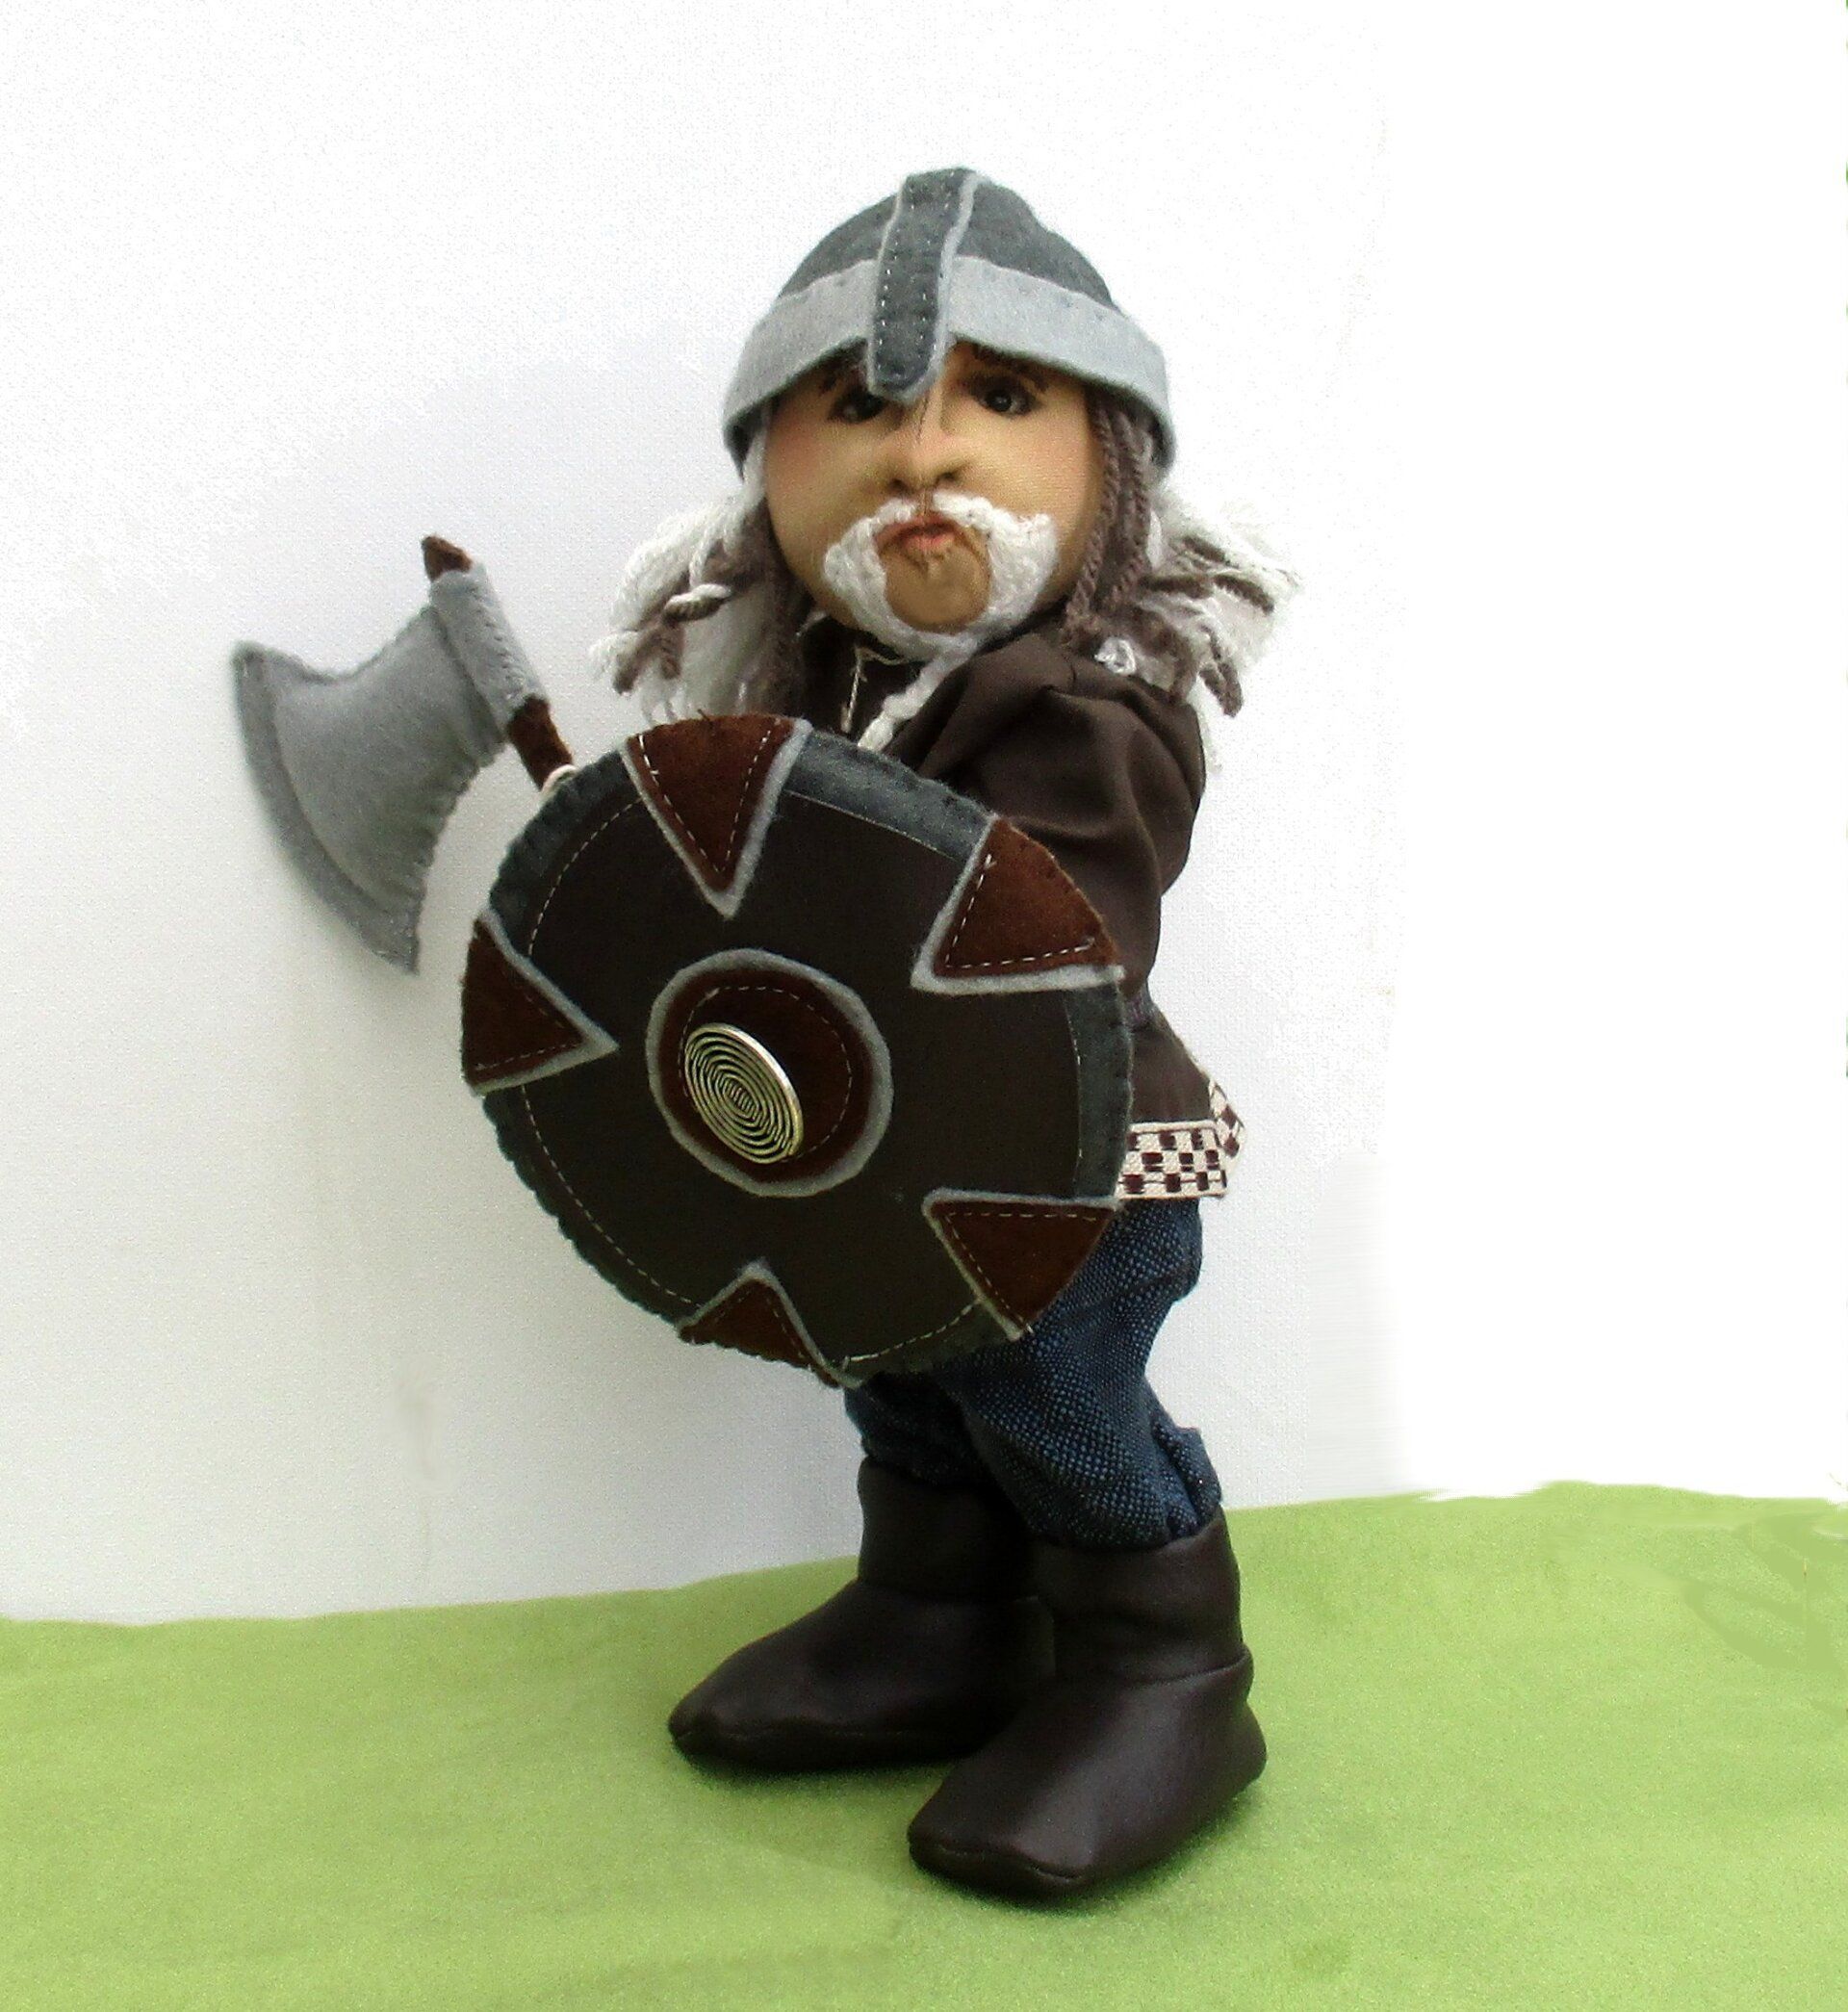 A little Viking doll